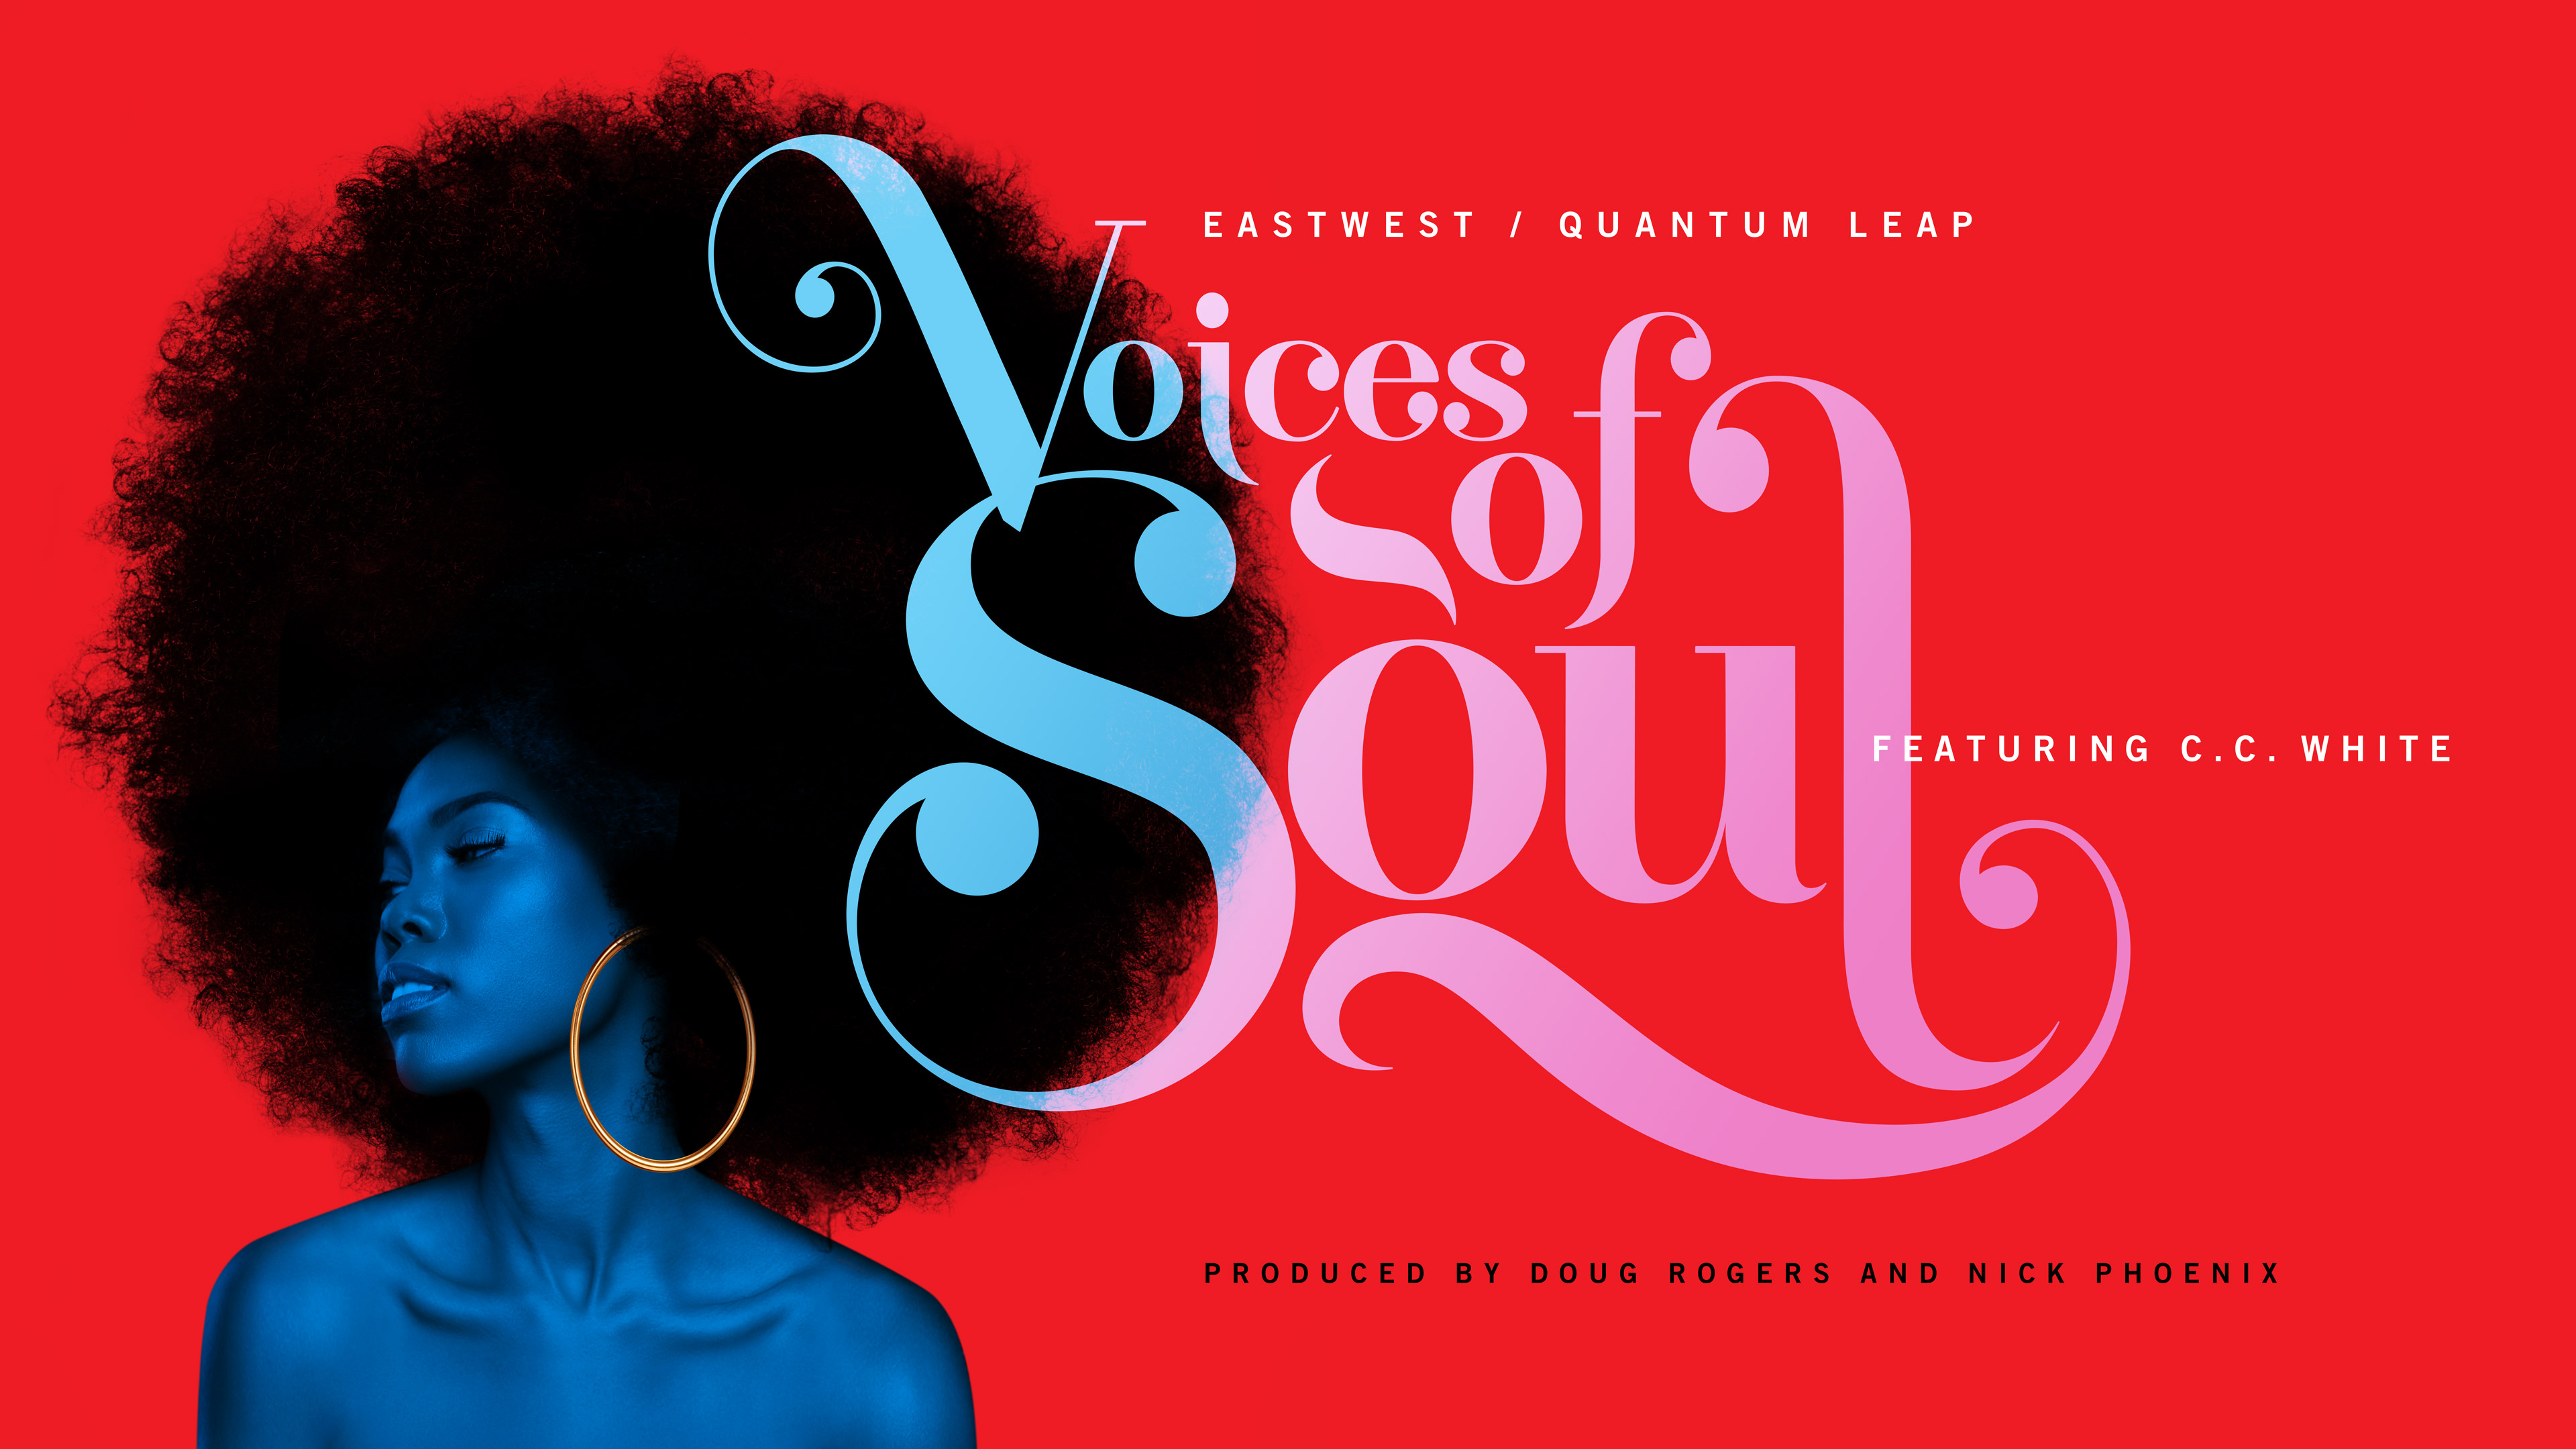 Voices of Soul